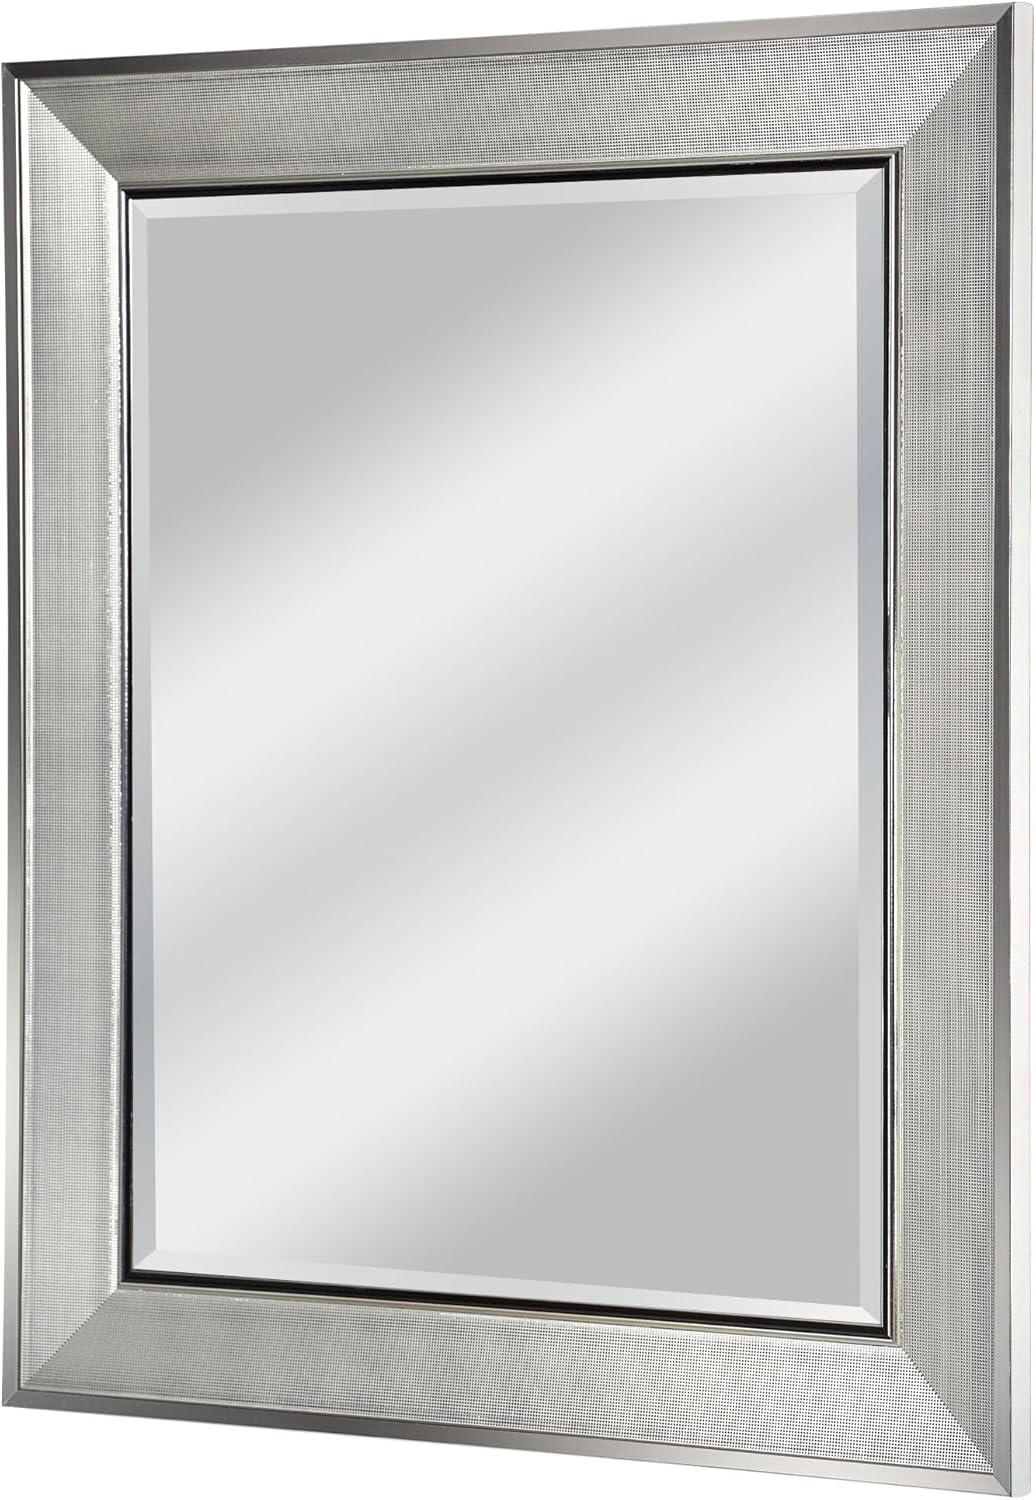 Pavé Chrome Frame Rectangular Beveled Wall Mirror - 29 x 35